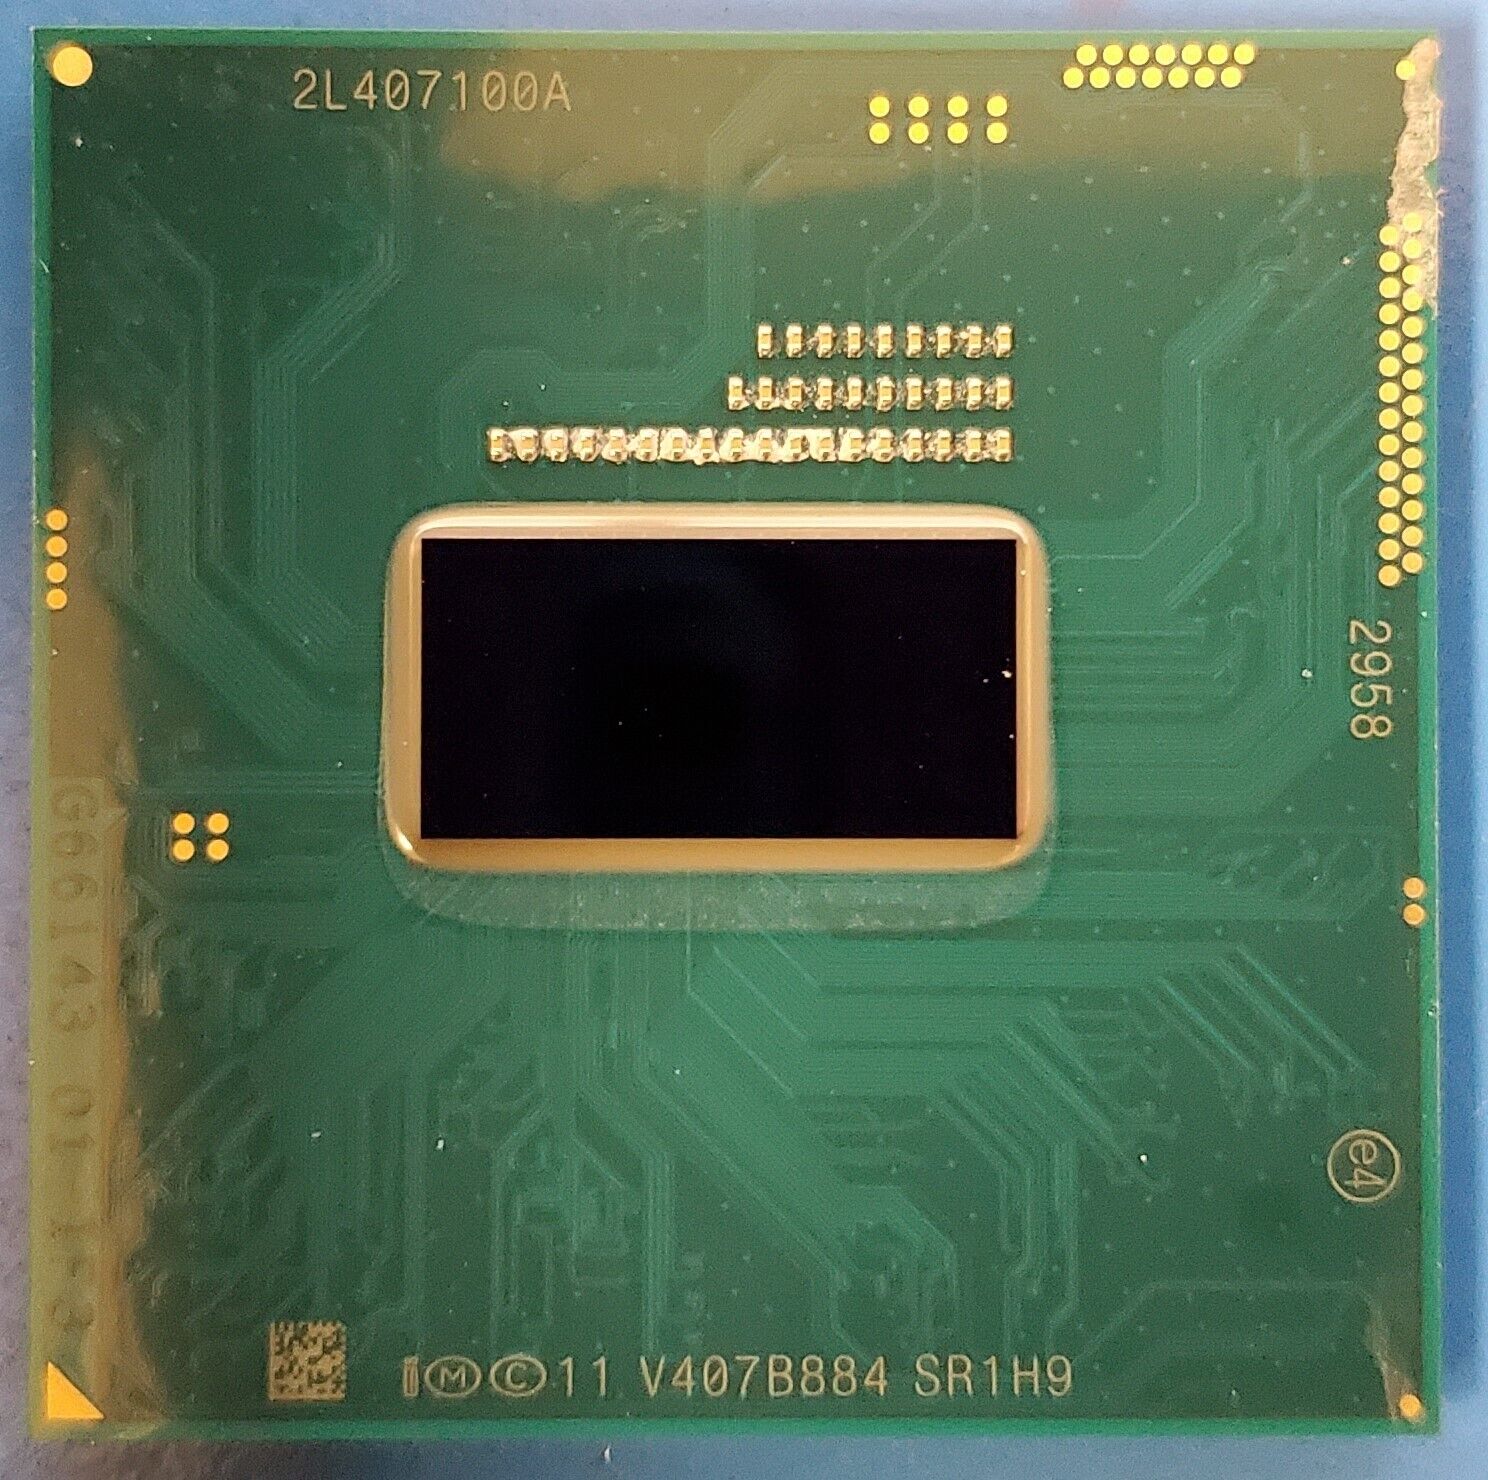 SR1H9 Intel Core i5-4300M 2.6GHZ 2 Core Socket G3 Laptop CPU